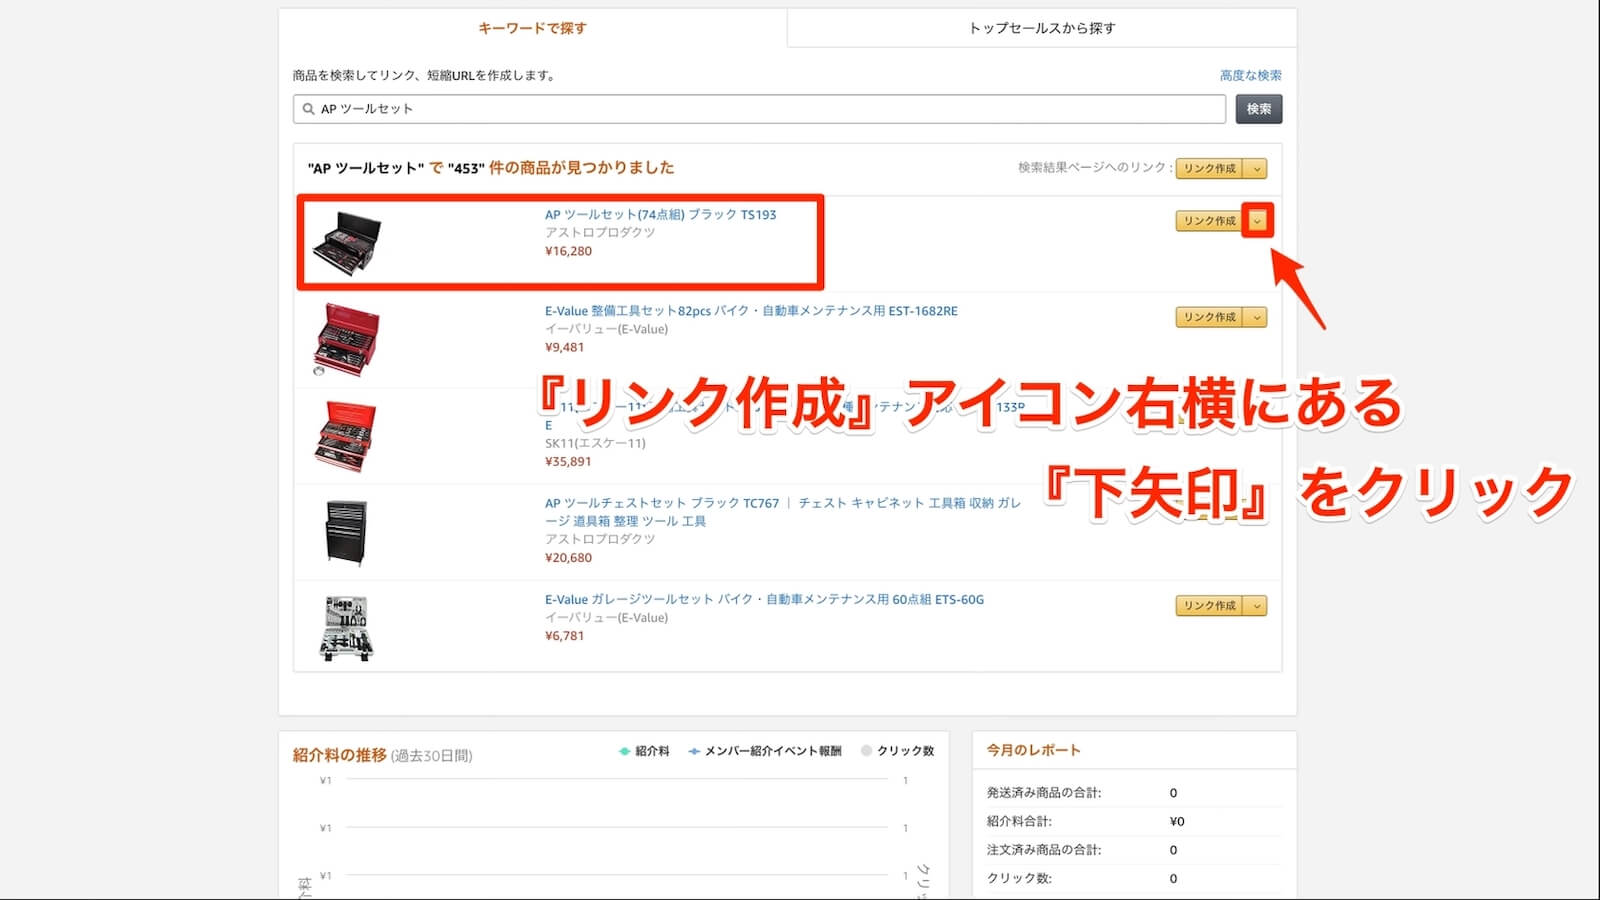 Amazon Associate Product Search Screen Capture